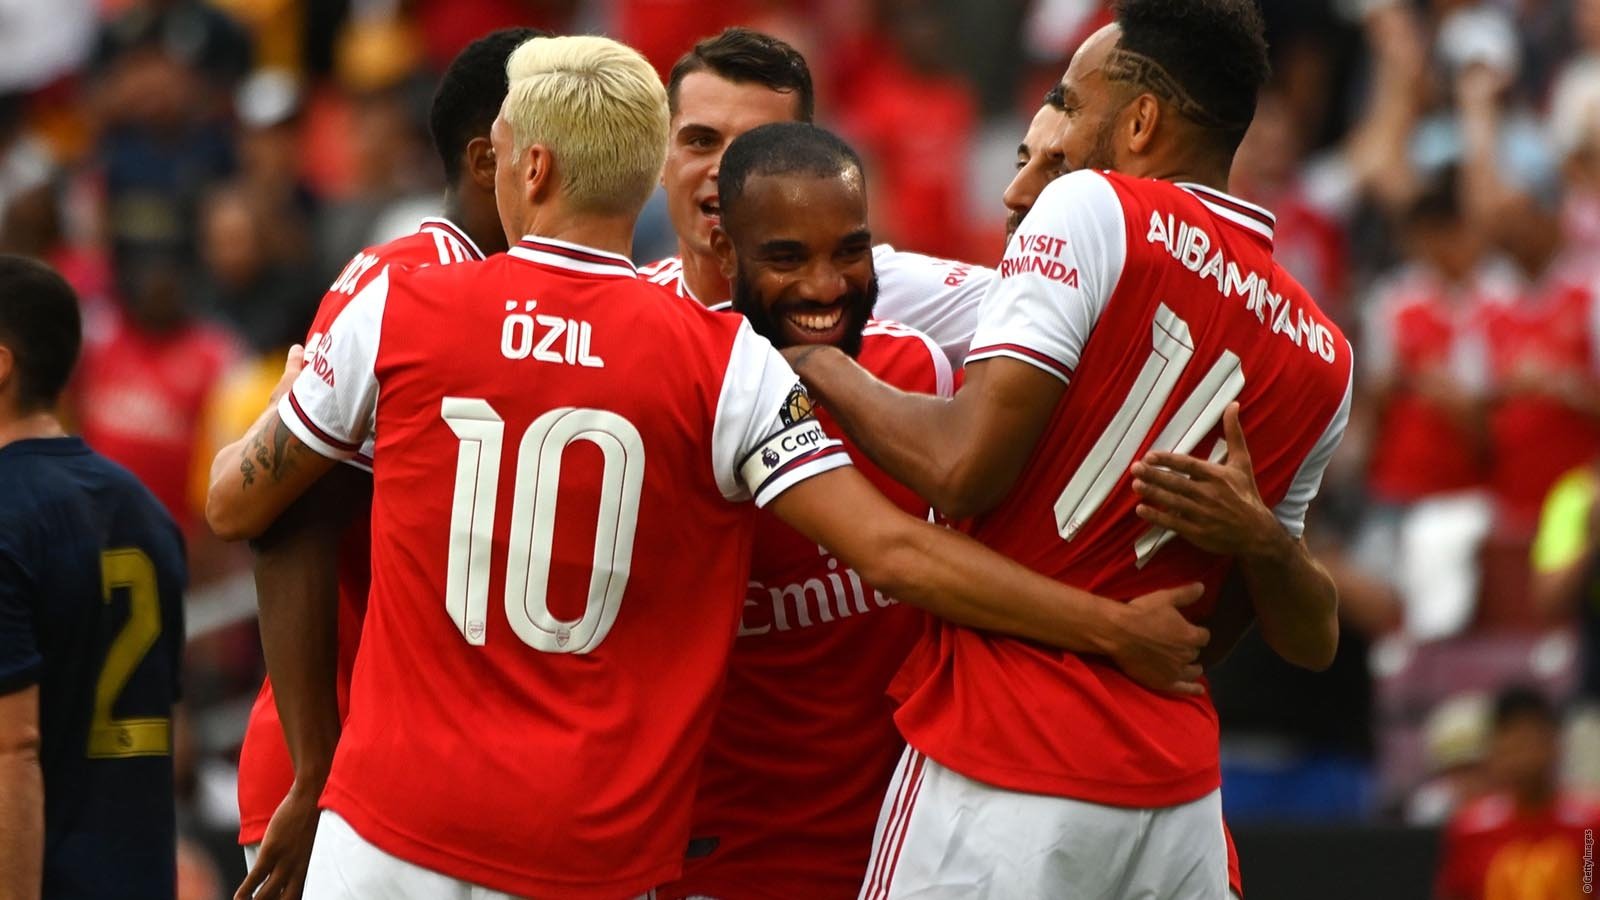 Highlights: Arsenal take on Real Madrid | Goals | News | Arsenal.com